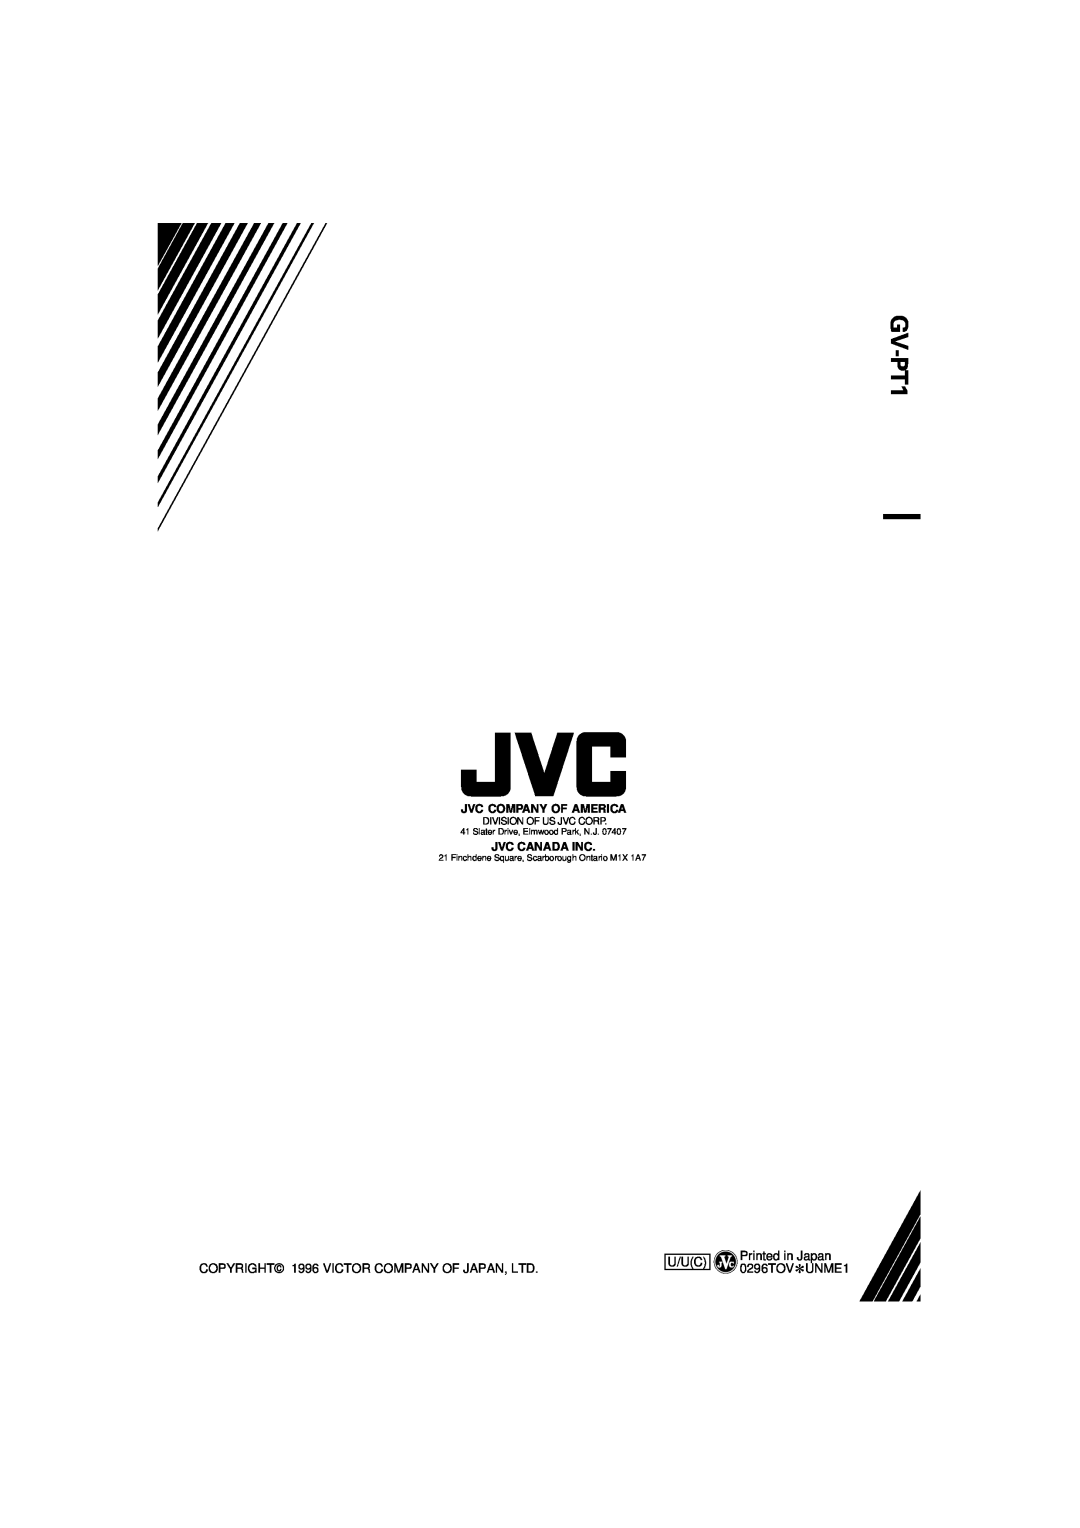 JVC GV-PT1 manual U/Uc, Printed in Japan 0296TOV*UNME1, Division Of Us Jvc Corp, Slater Drive, Elmwood Park, N.J 